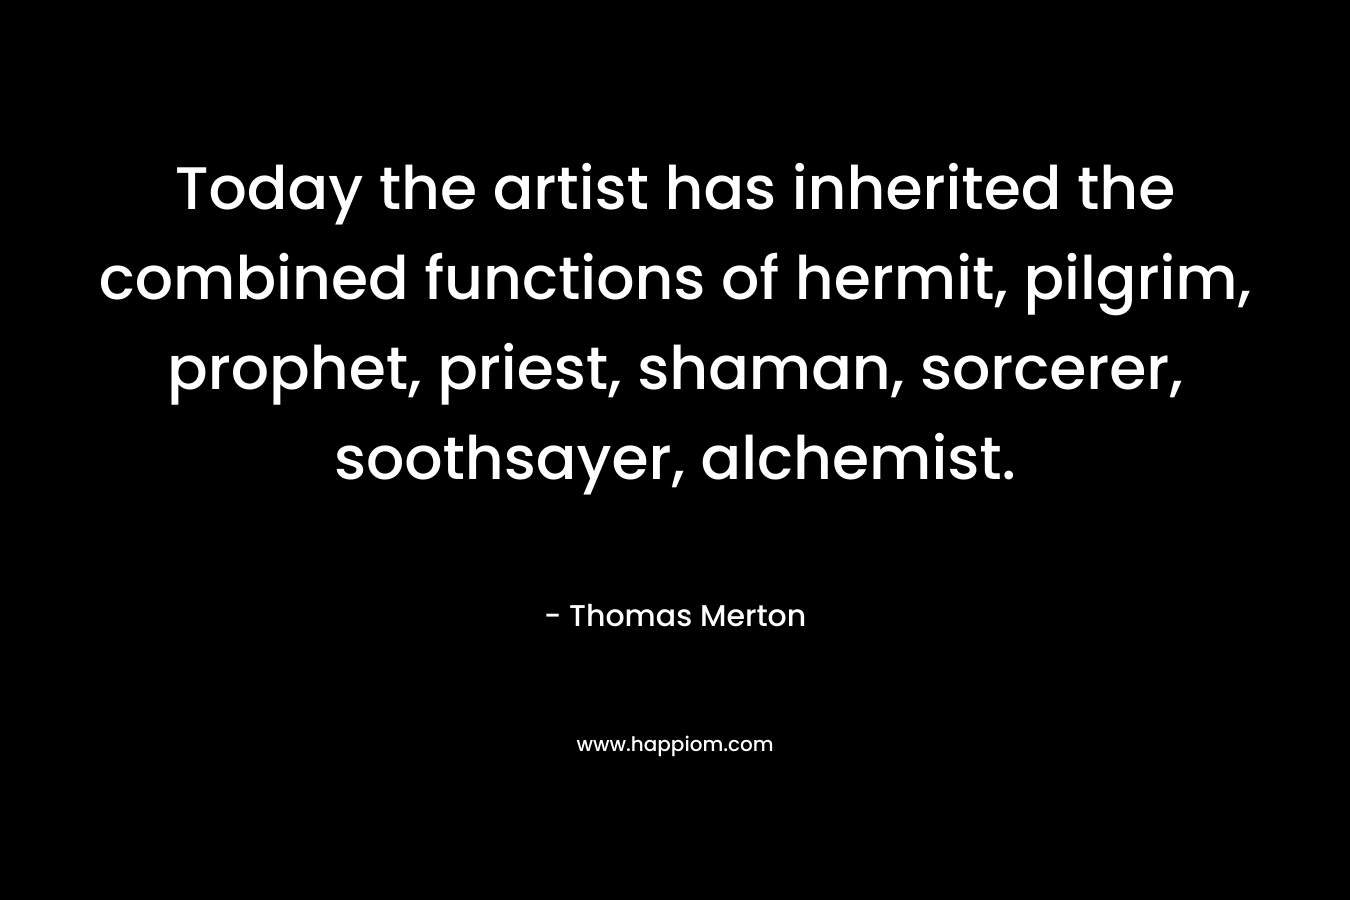 Today the artist has inherited the combined functions of hermit, pilgrim, prophet, priest, shaman, sorcerer, soothsayer, alchemist. – Thomas Merton